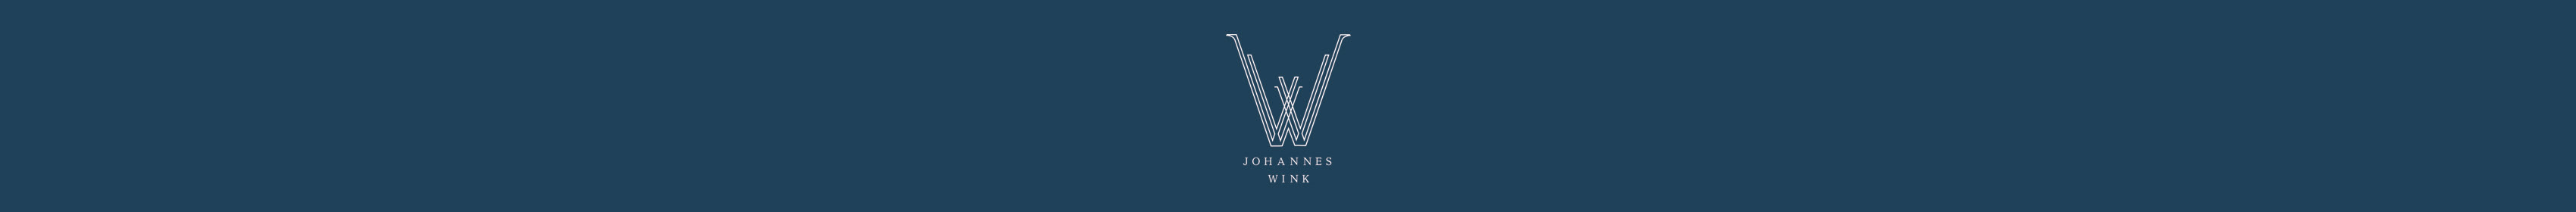 Johannes Wink's profile banner